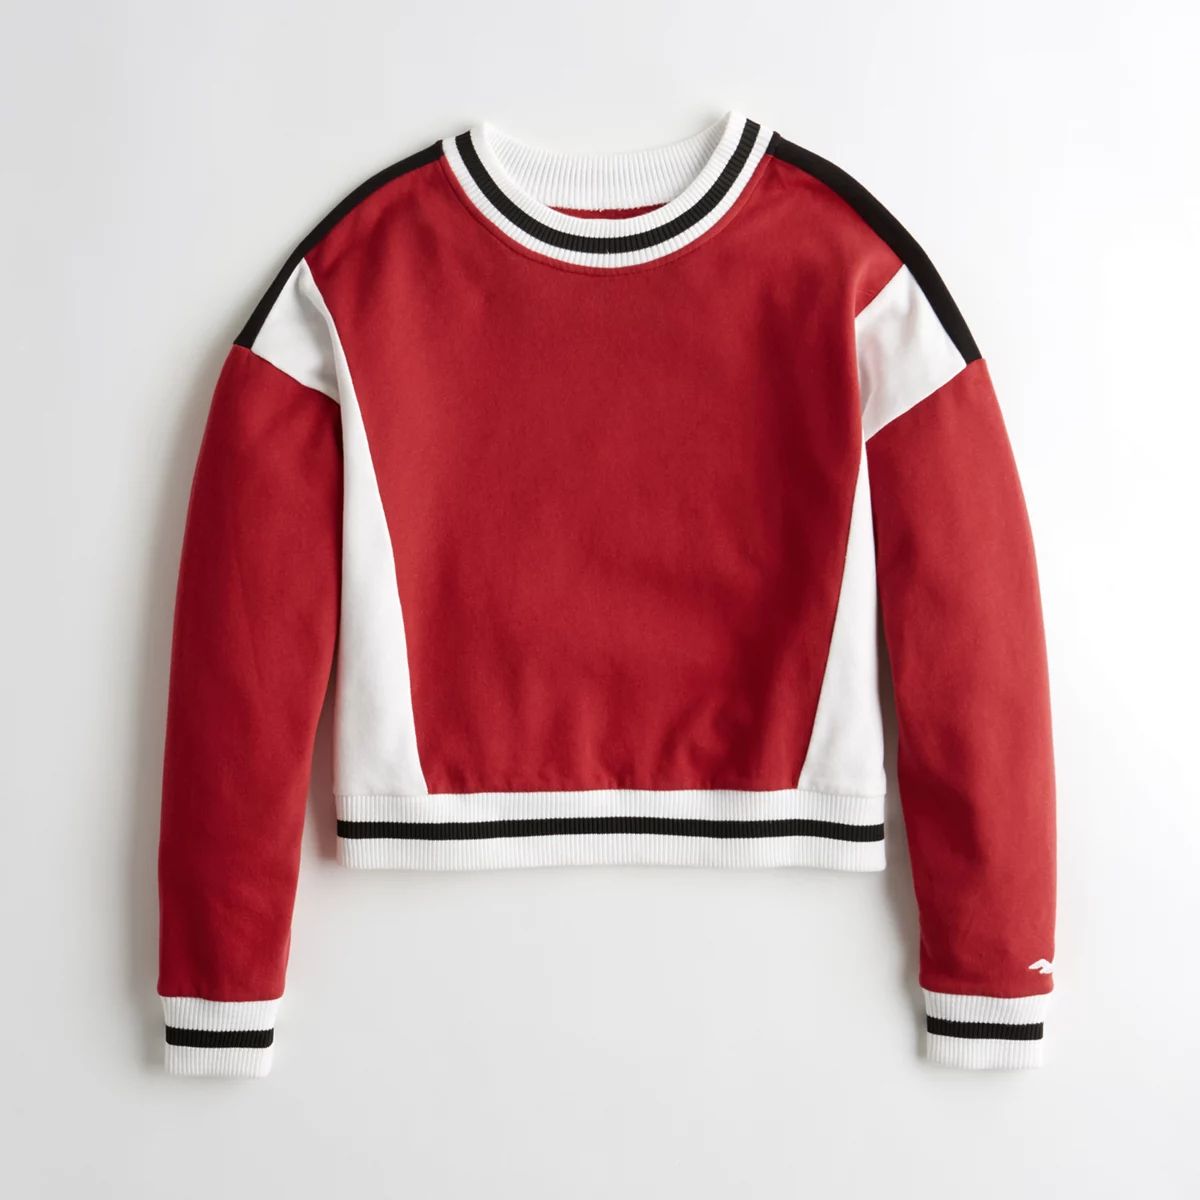 Girls Colorblock Crewneck Sweatshirt from Hollister | Hollister US